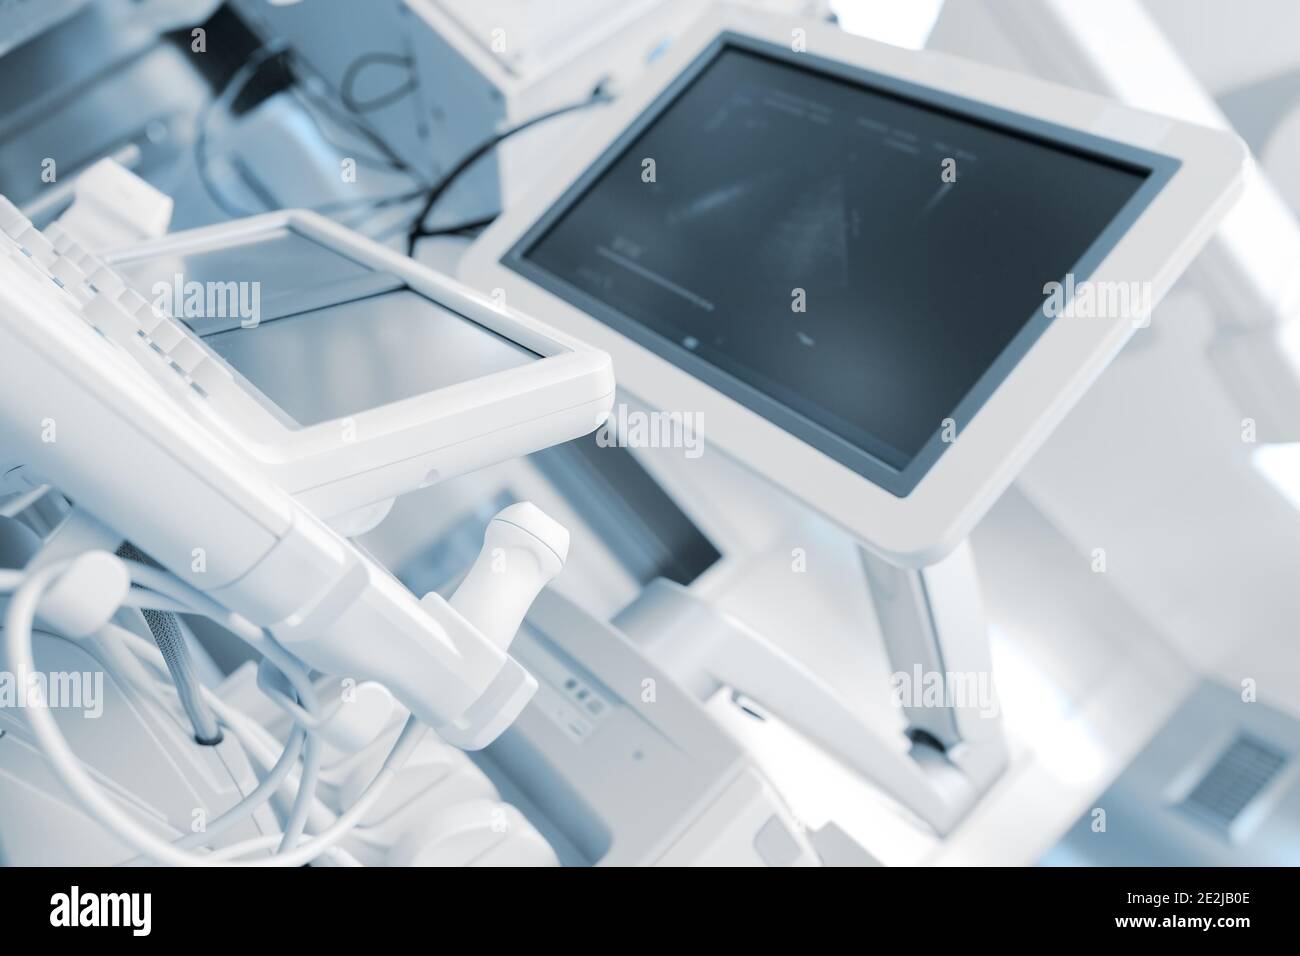 Modern medical equipment in hospital room. Stock Photo